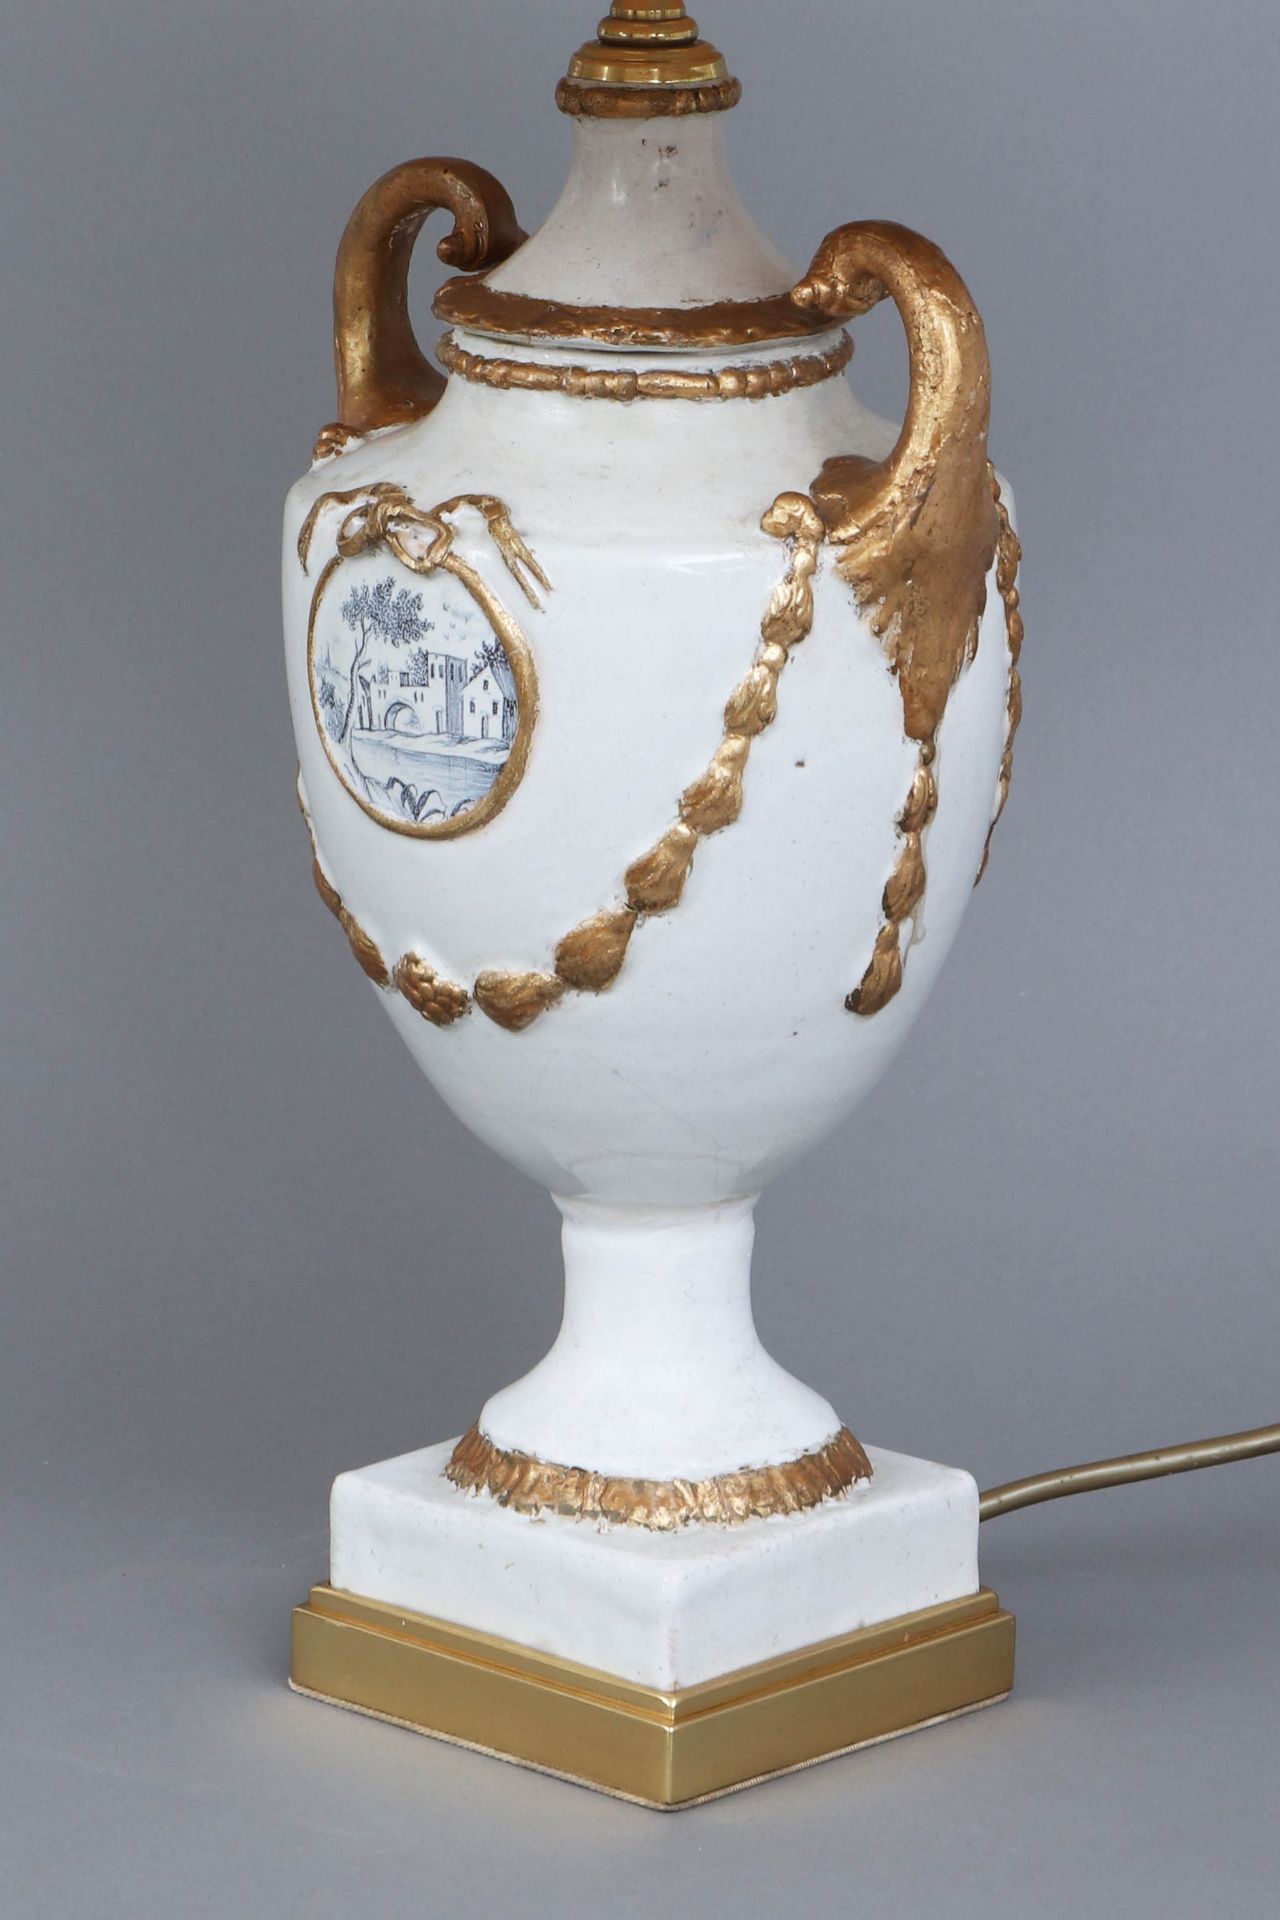 Tischlampe mit Fuß in Form einer Keramik Henkelamphore - Image 2 of 4